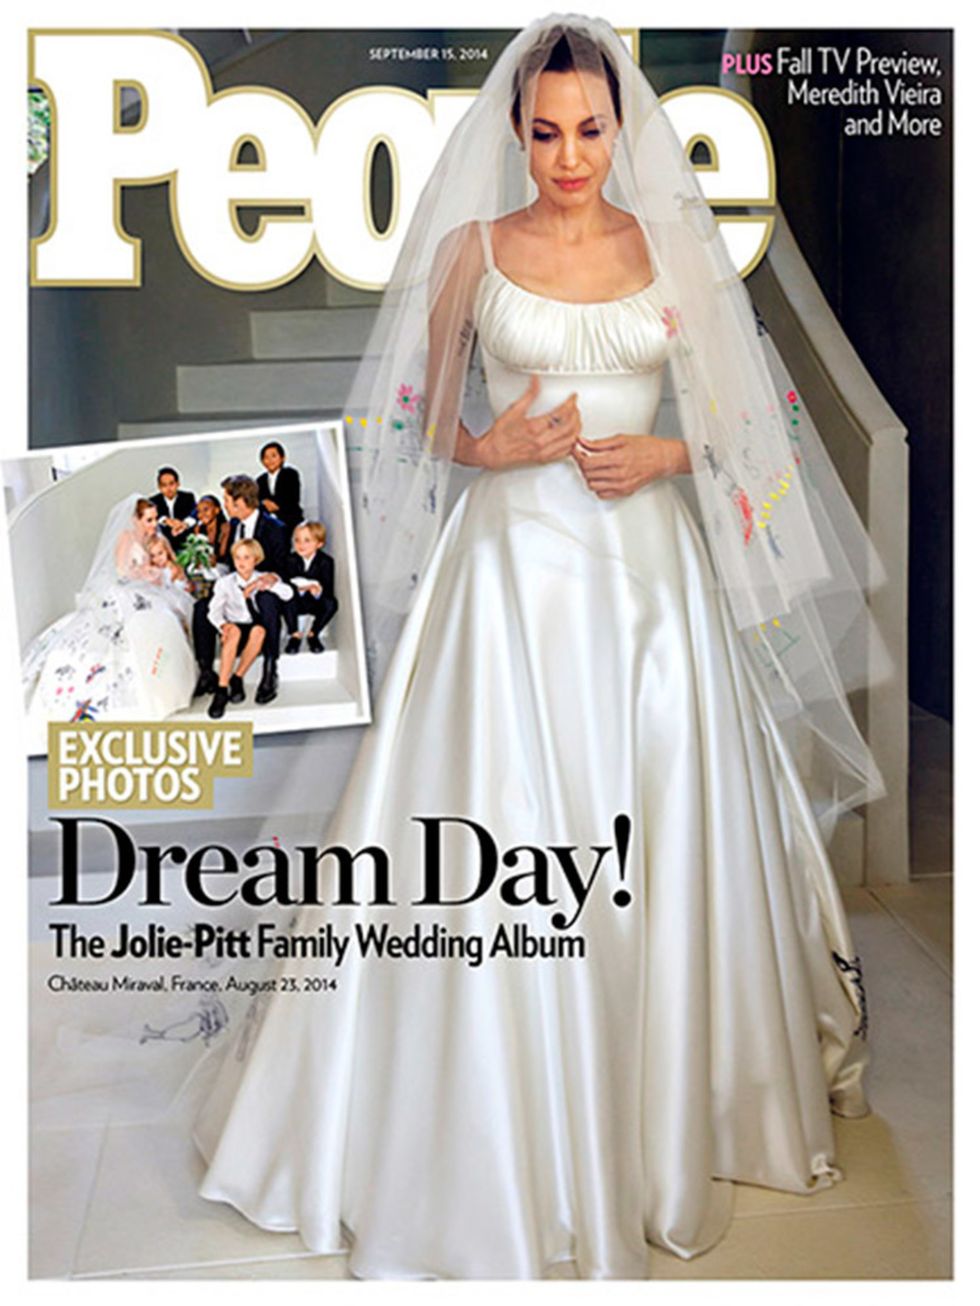 Brad Pitt wore Salvatore Ferragamo to marry long-term love Angelina Jolie, August 2014.